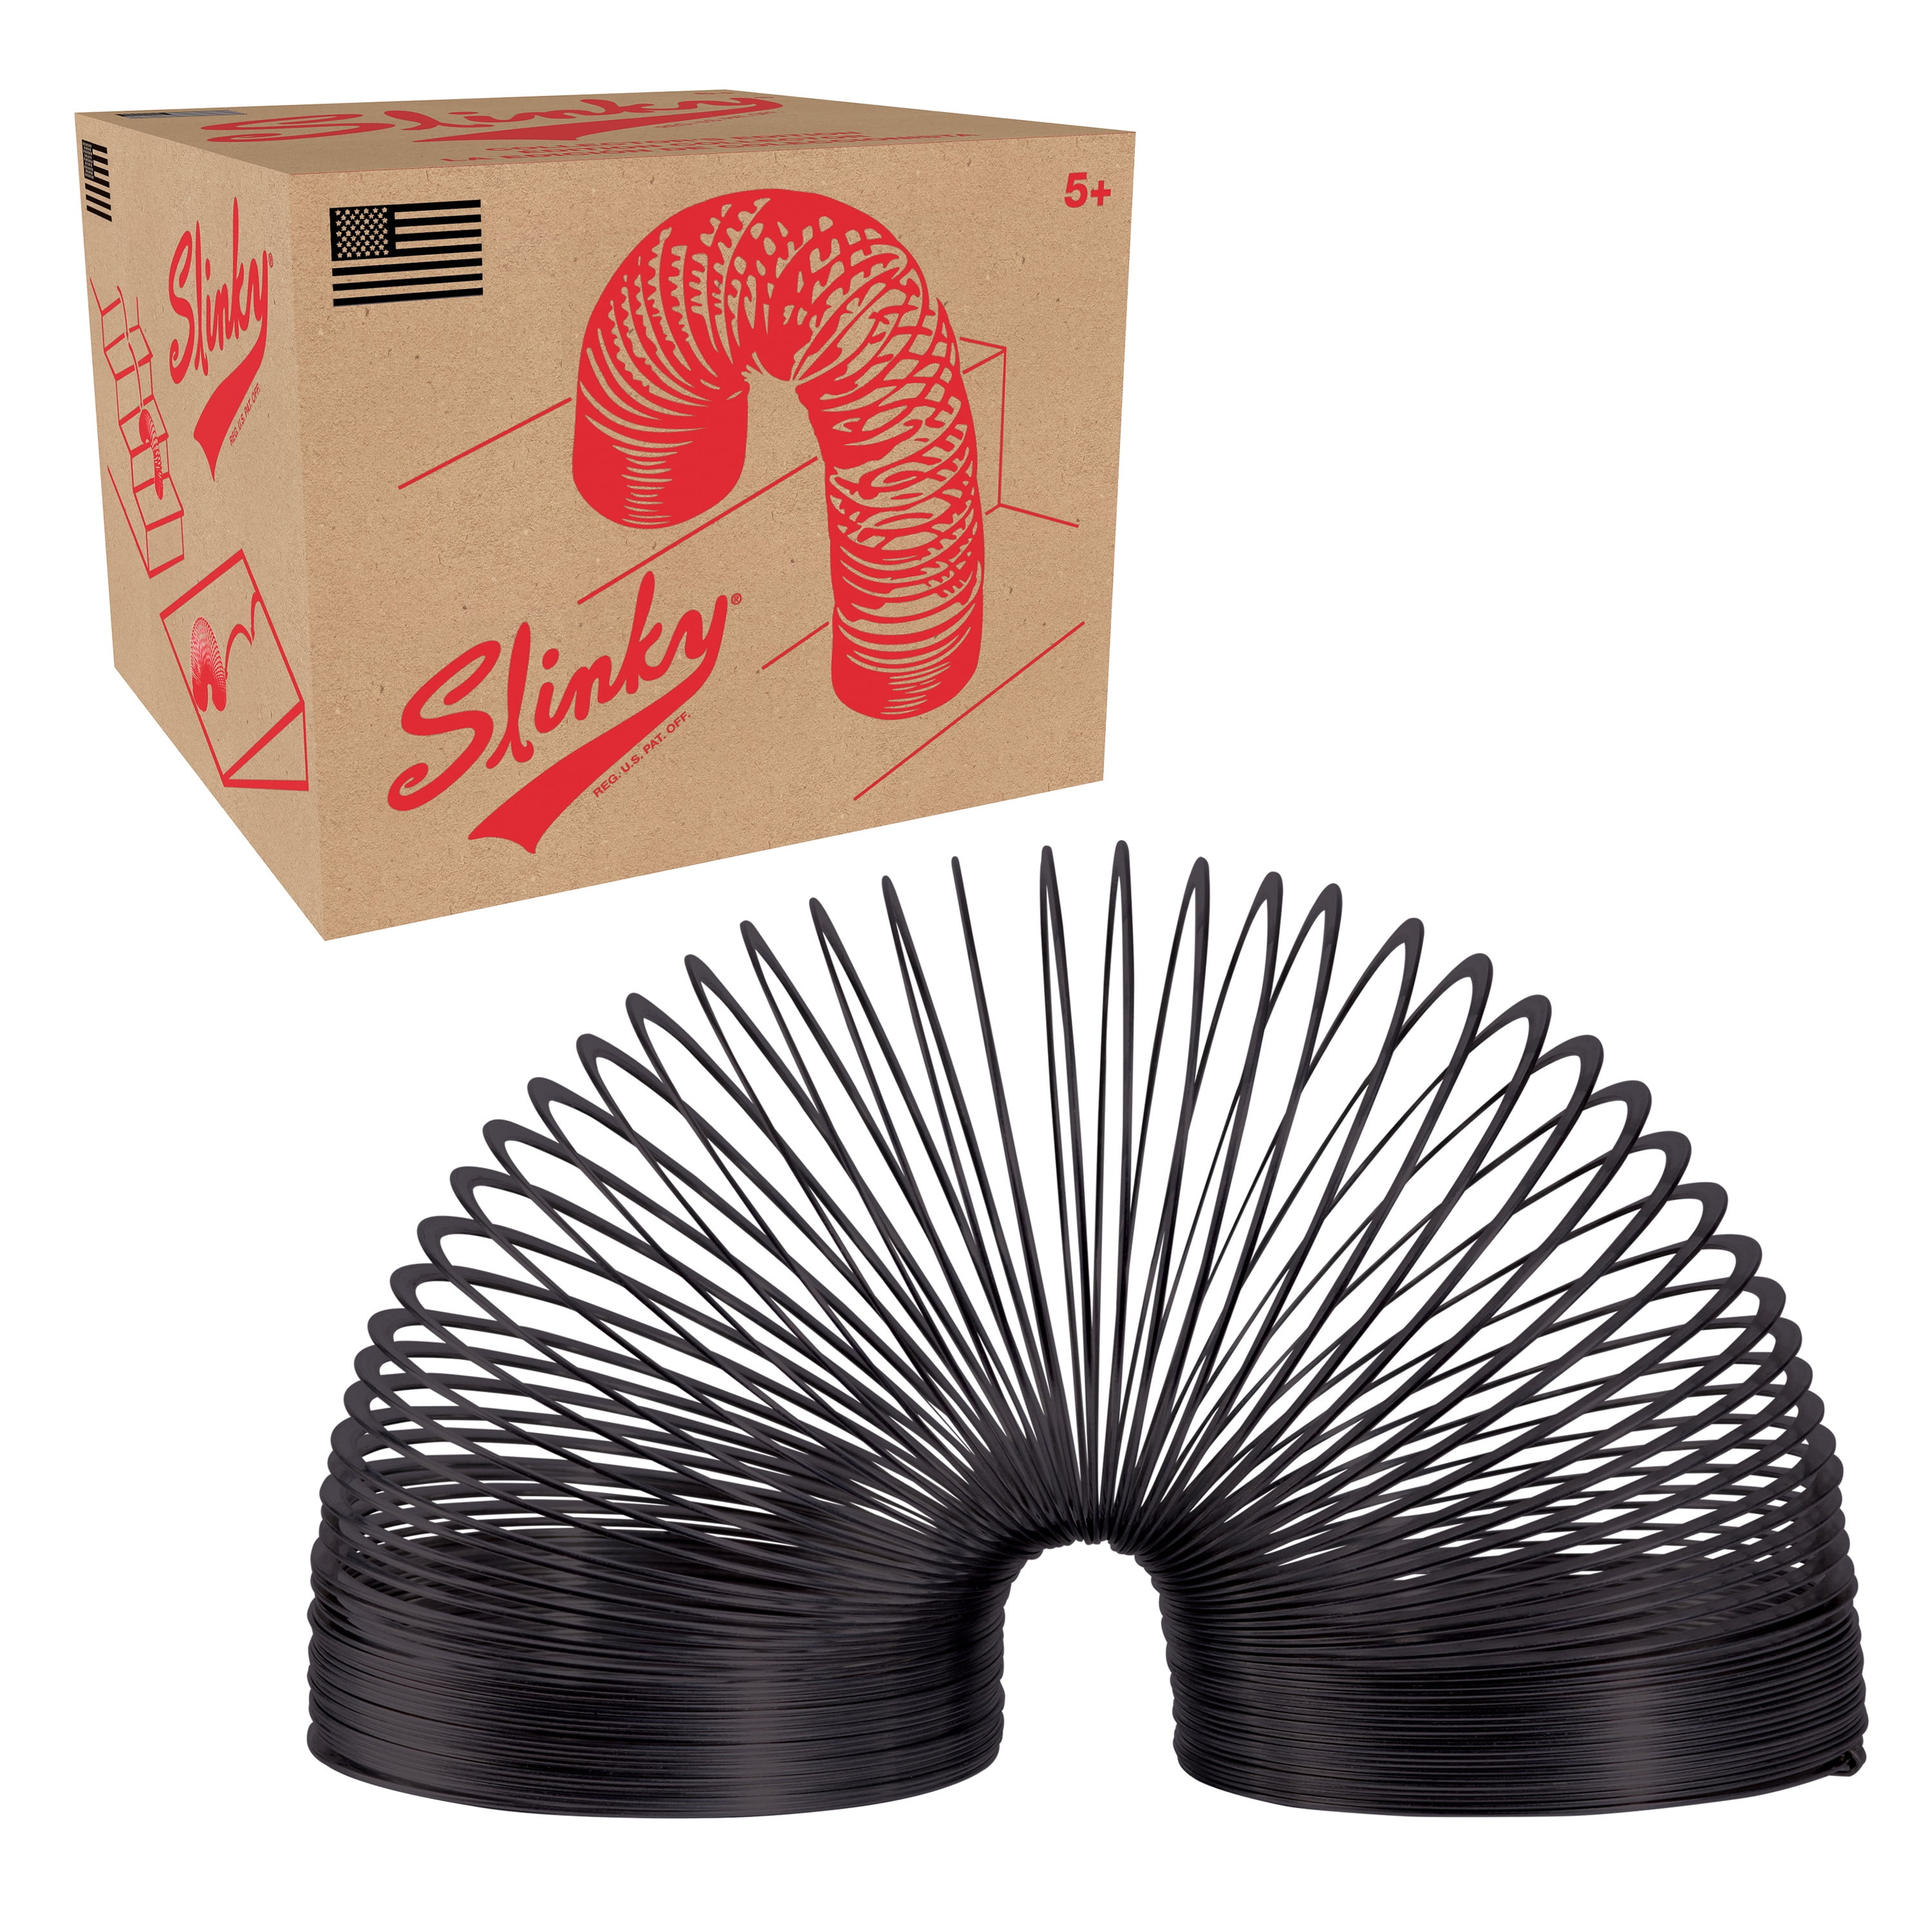 Metal Slinky The Original Giant Slinky 